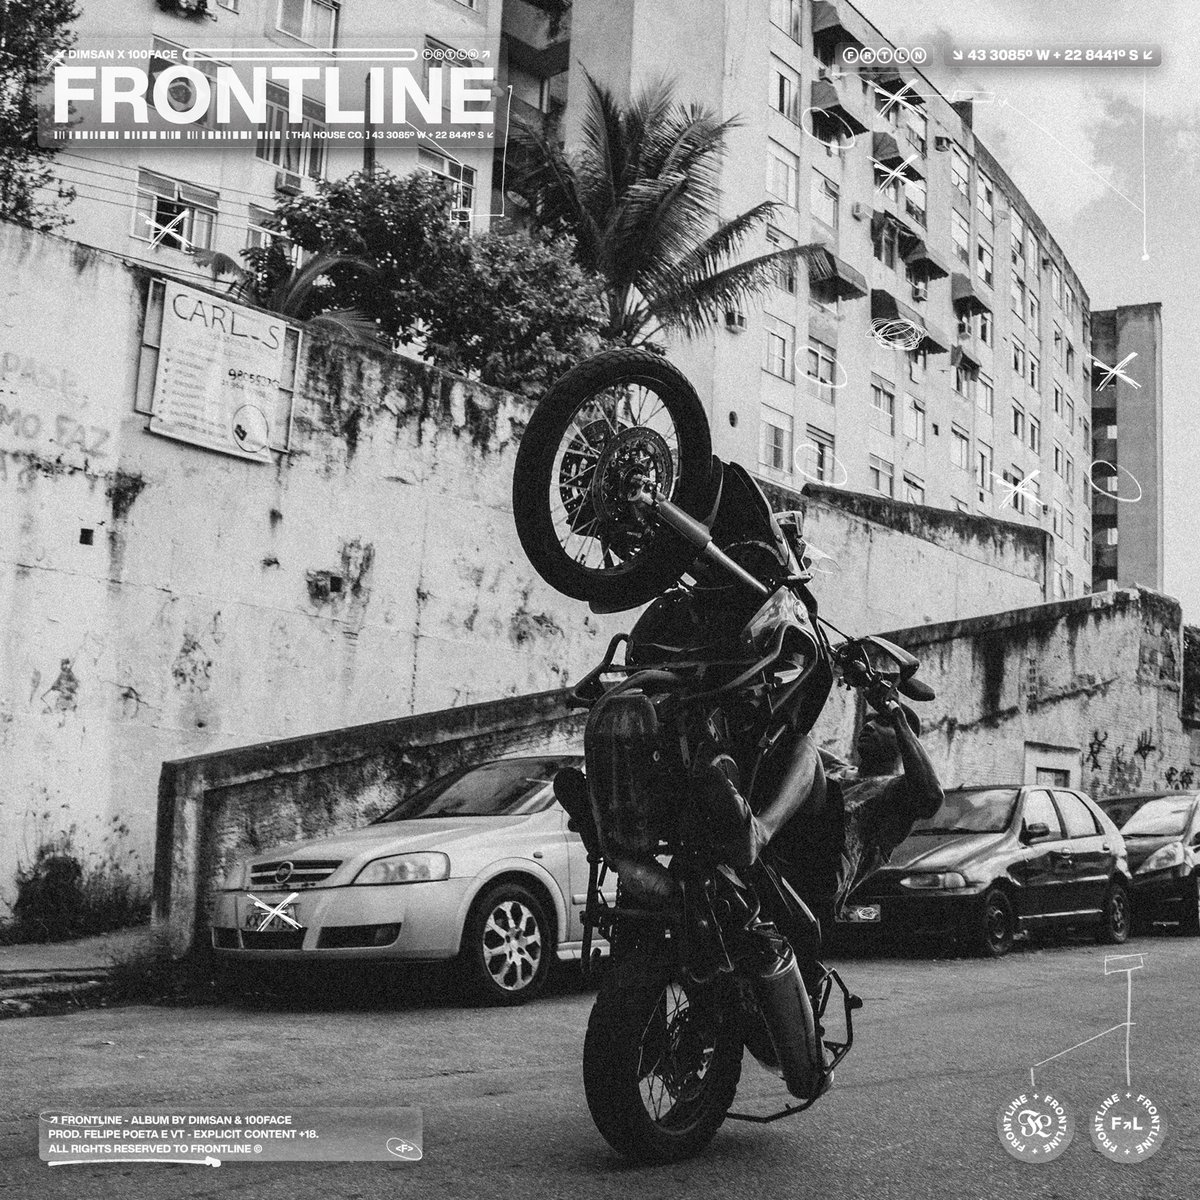 [@dimsvn, @Ninja100face] DIMSAN & 100FACE apresentam o projeto colaborativo 'FRONTLINE' tinyurl.com/2yehddrb